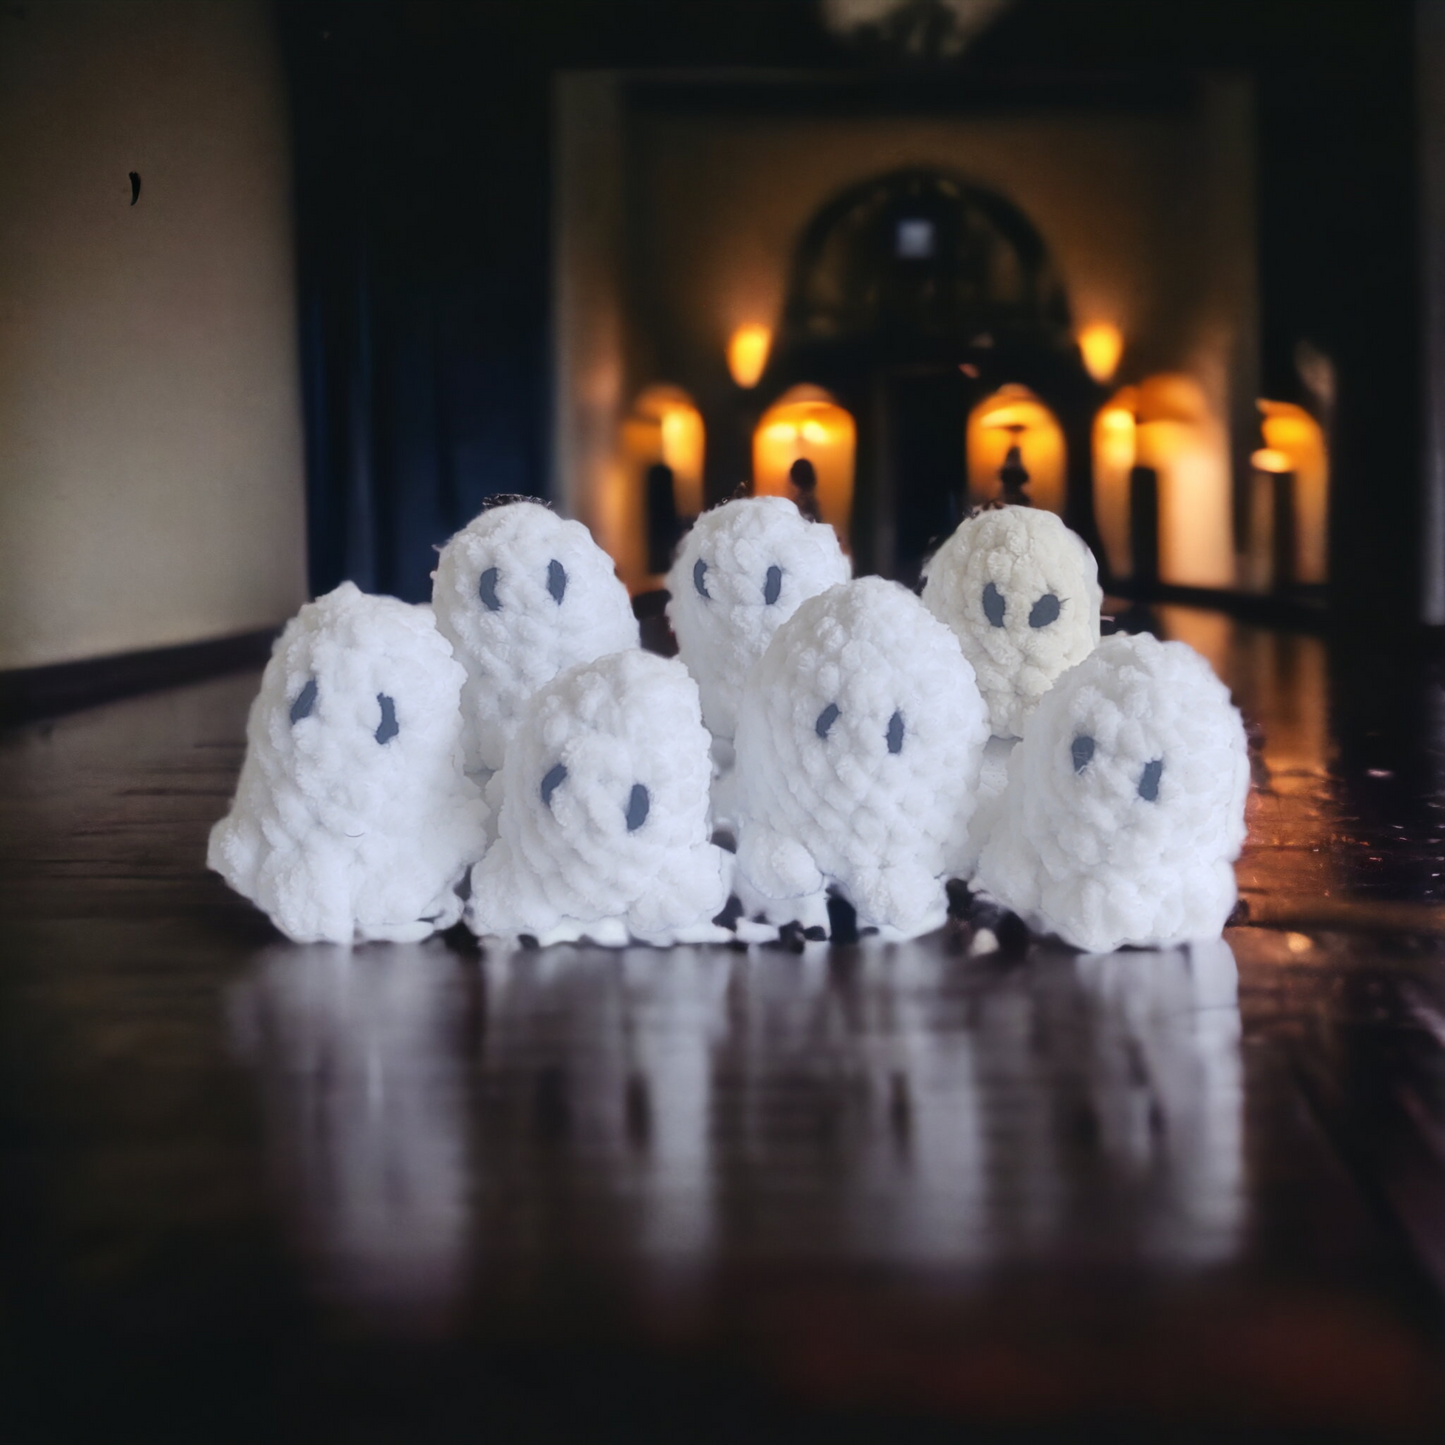 Ghosts - stuffed plushies - Halloween Decor